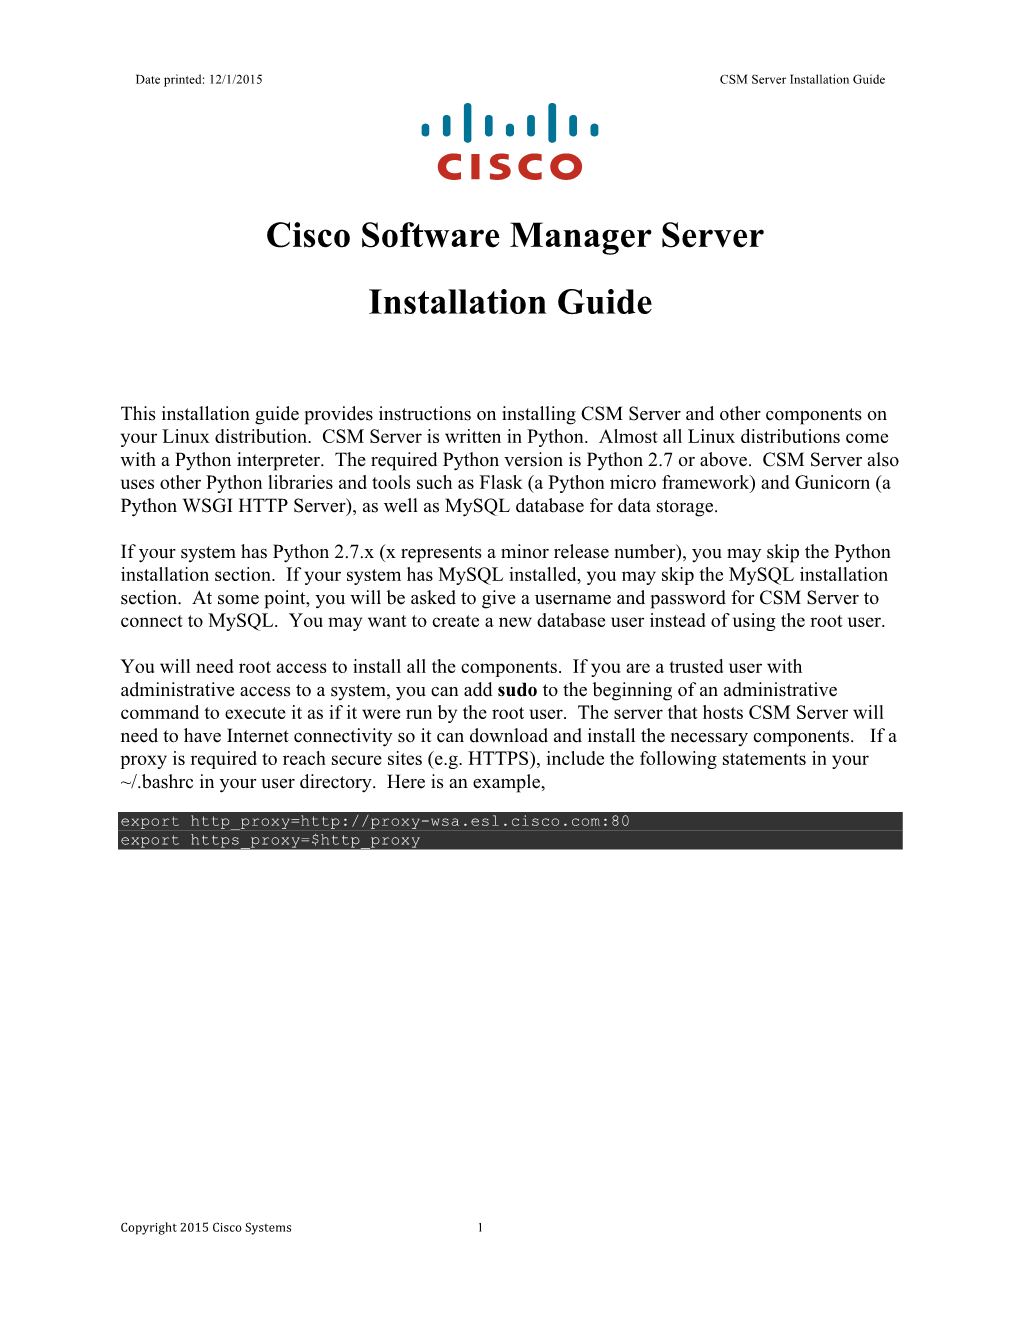 Cisco Software Manager Server Installation Guide